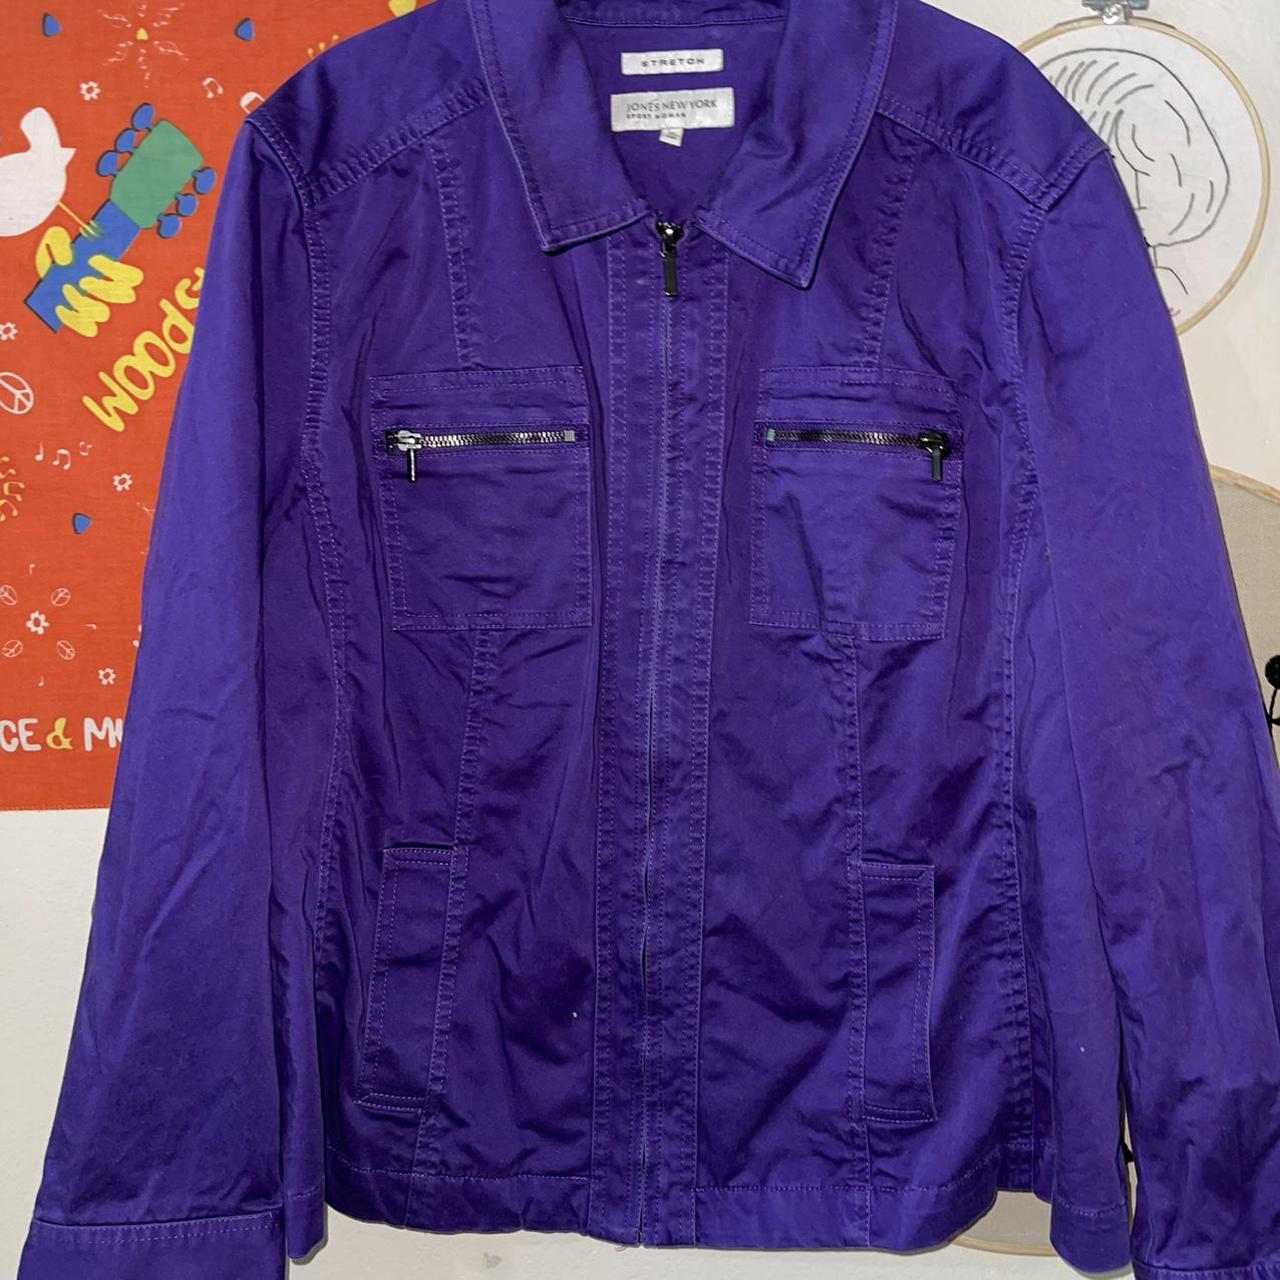 Product Image 3 - Jones New York purple jacket.